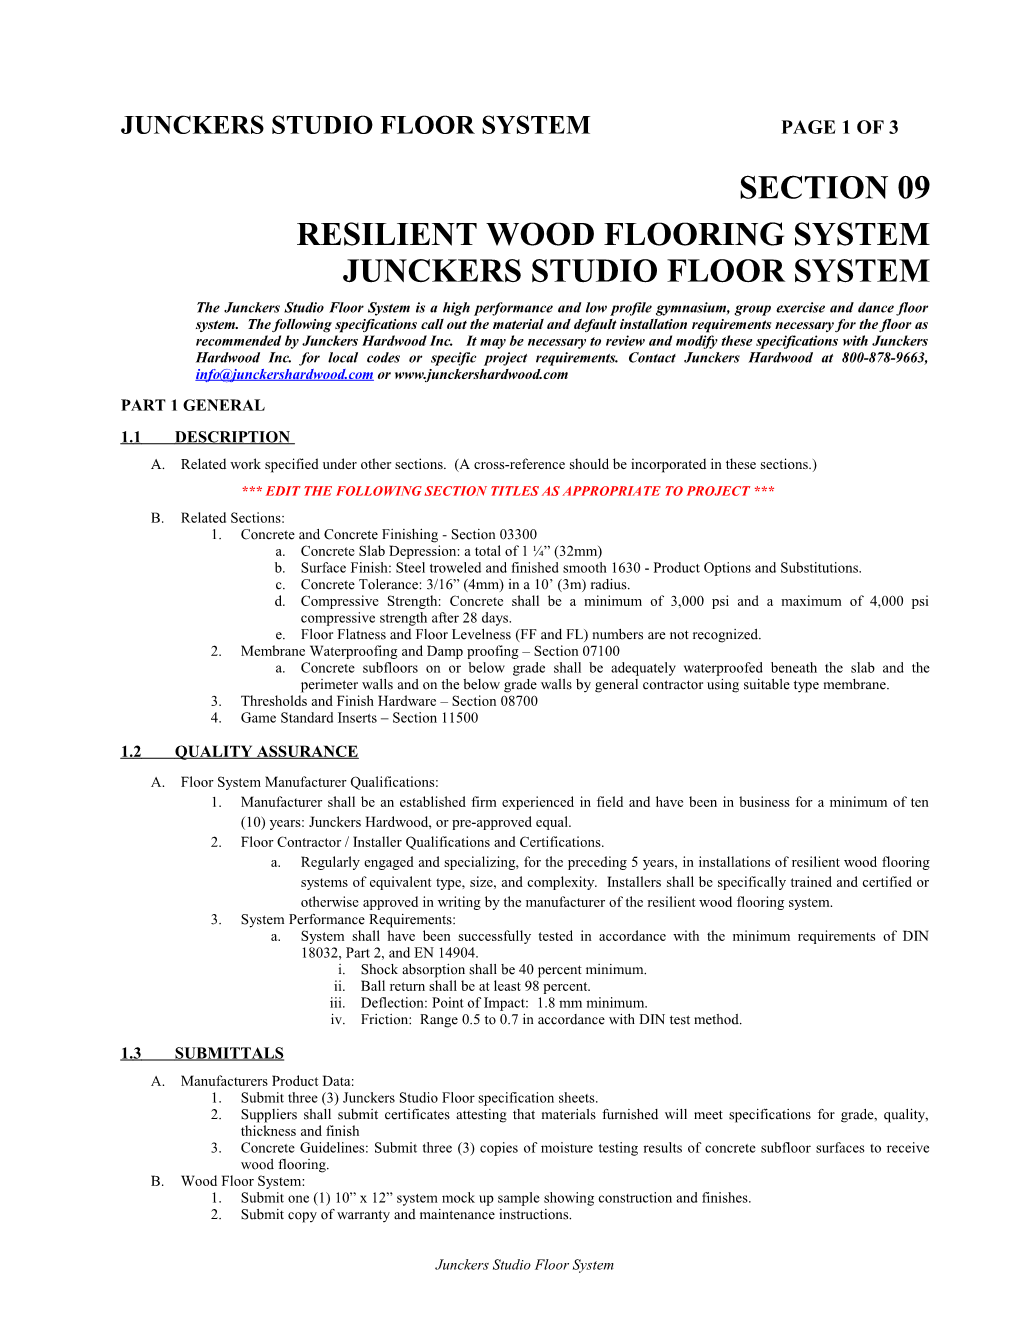 Resilient Wood Flooring Systemjunckers STUDIO FLOOR System